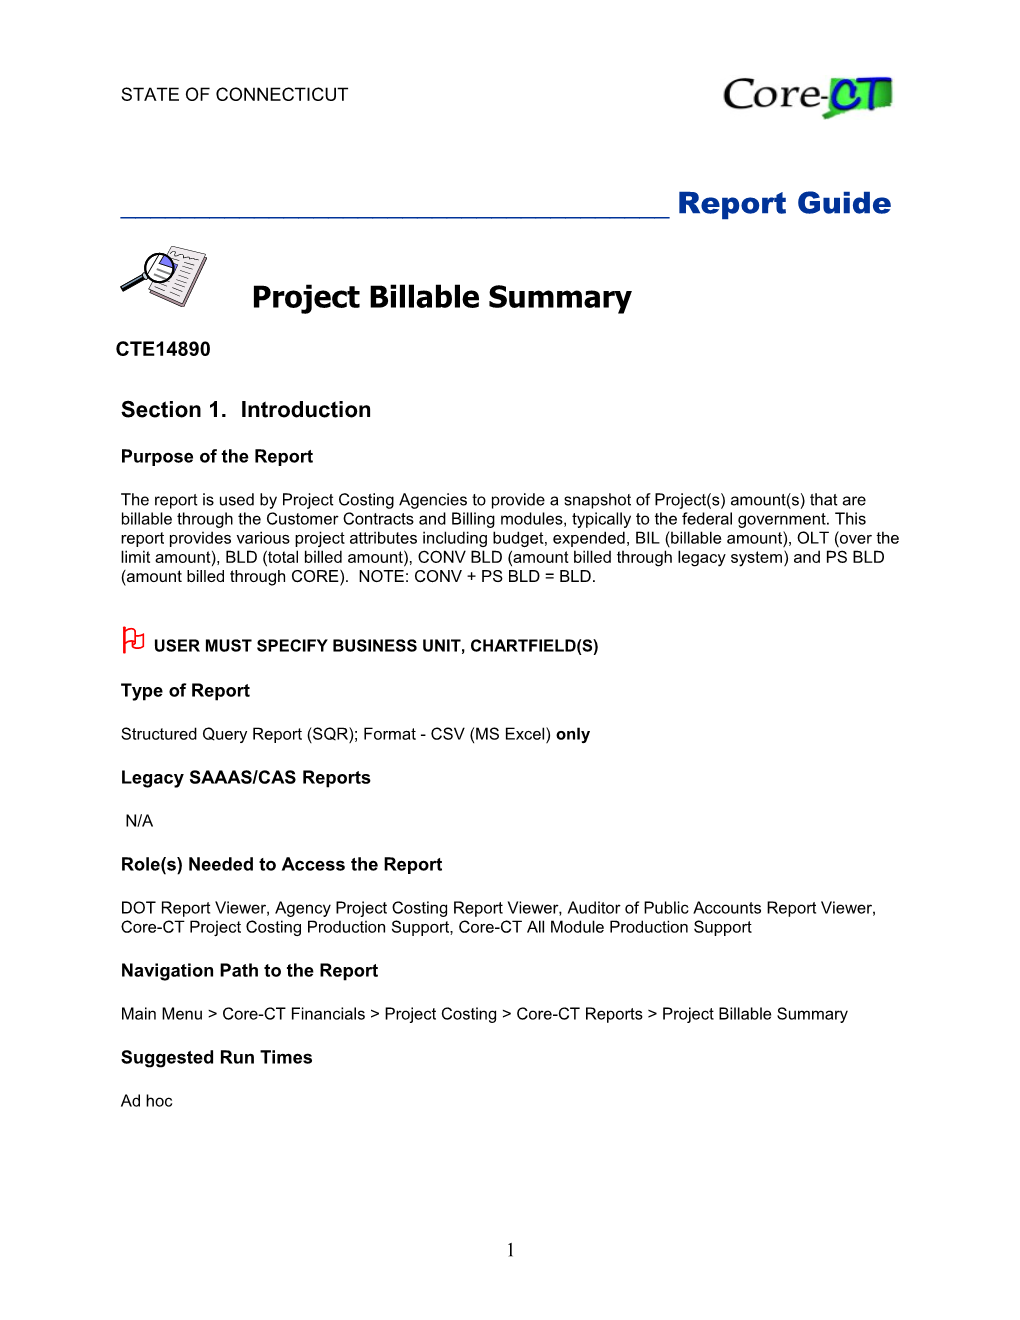 Project Billable Summary (CTE14890)